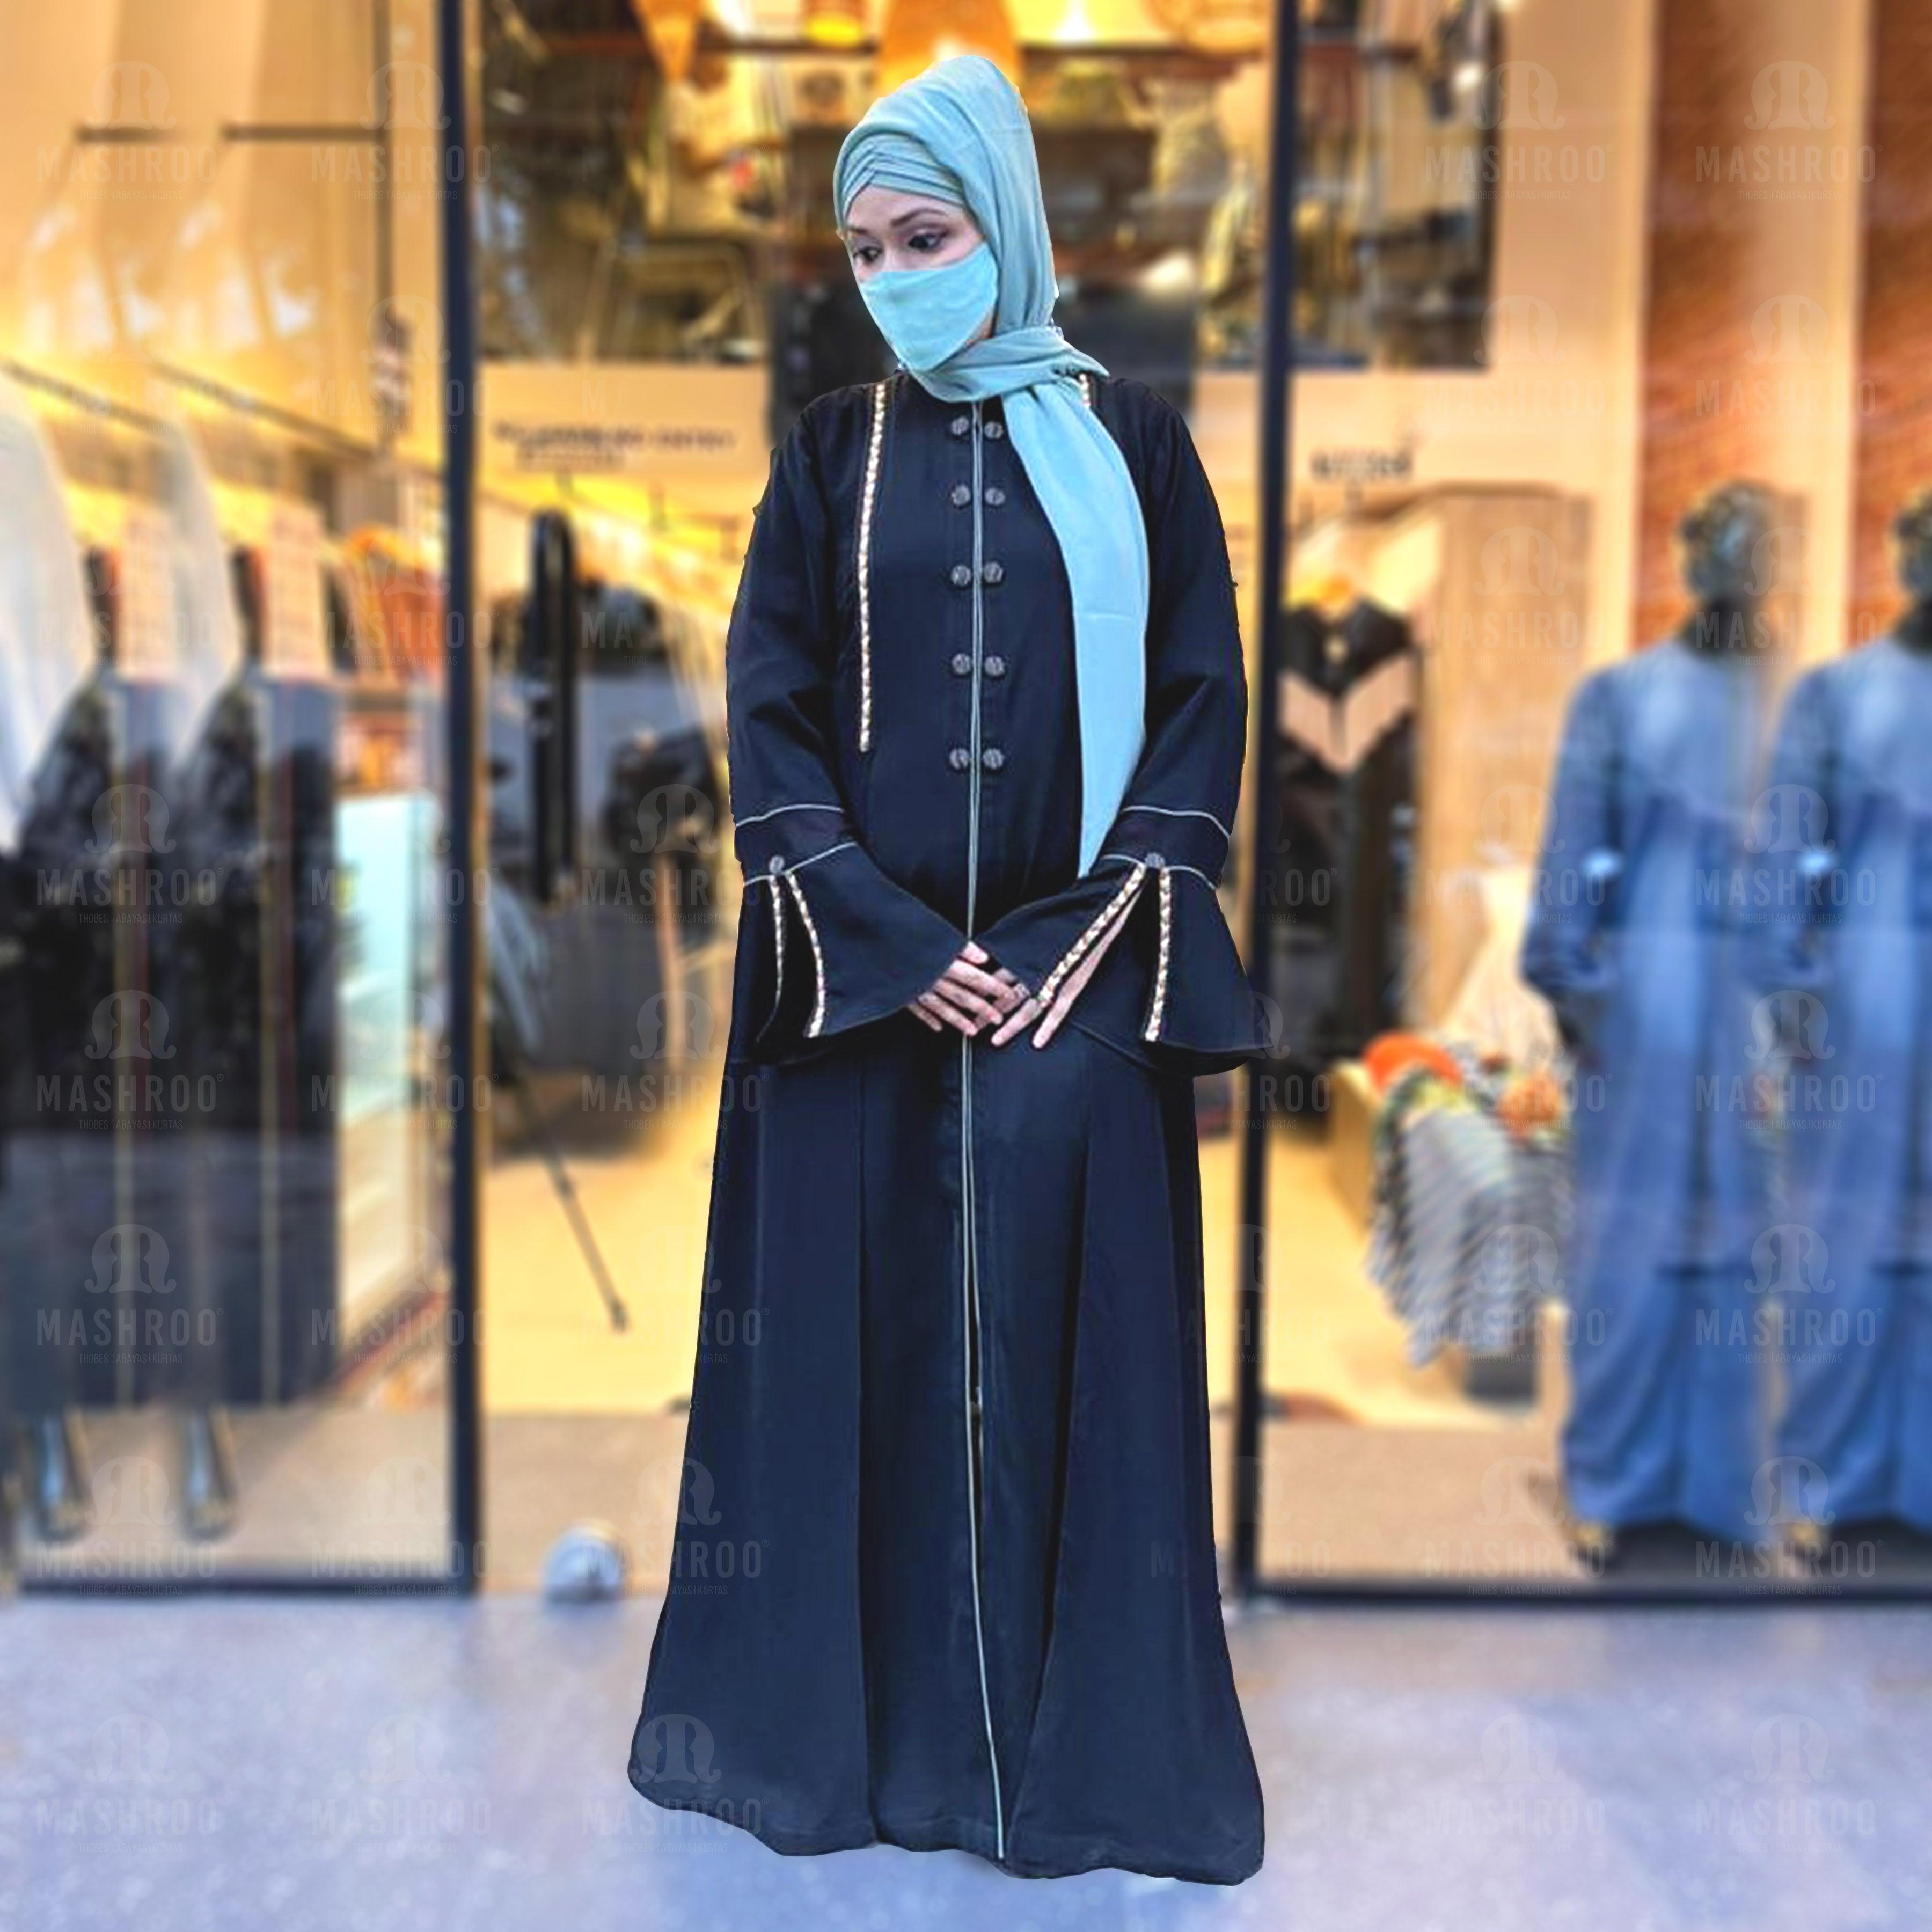 Bilix Designer Abaya for Women - Mashroo